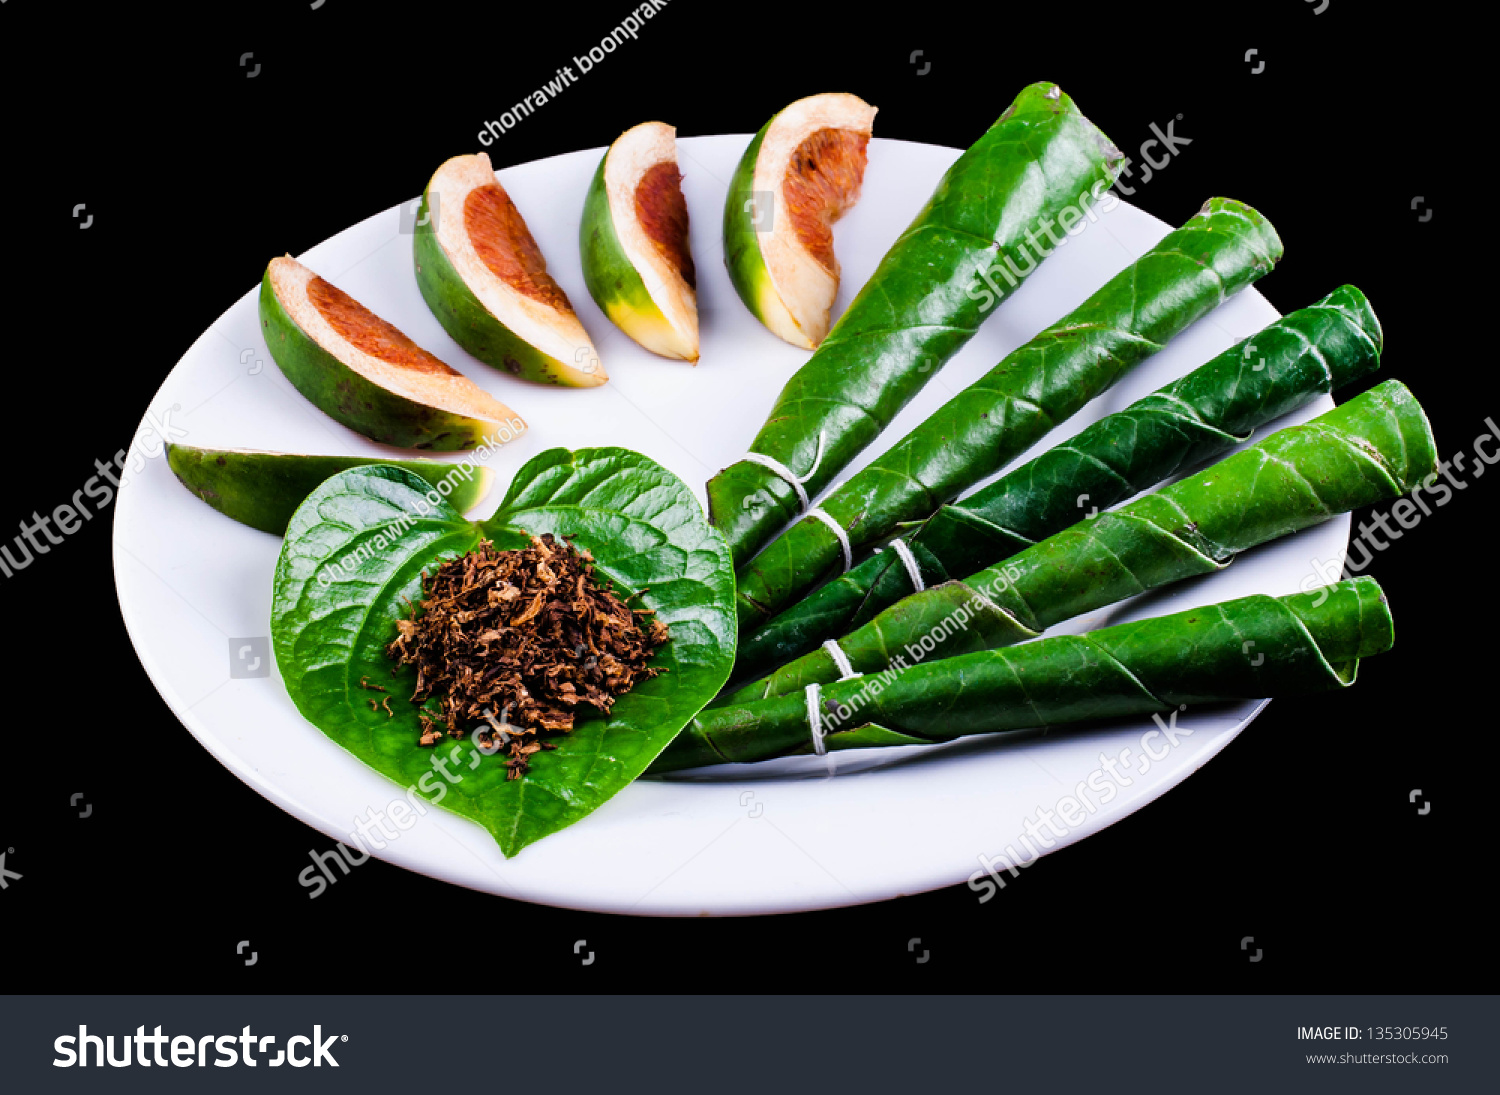 Image result for areca nut and betel leaf